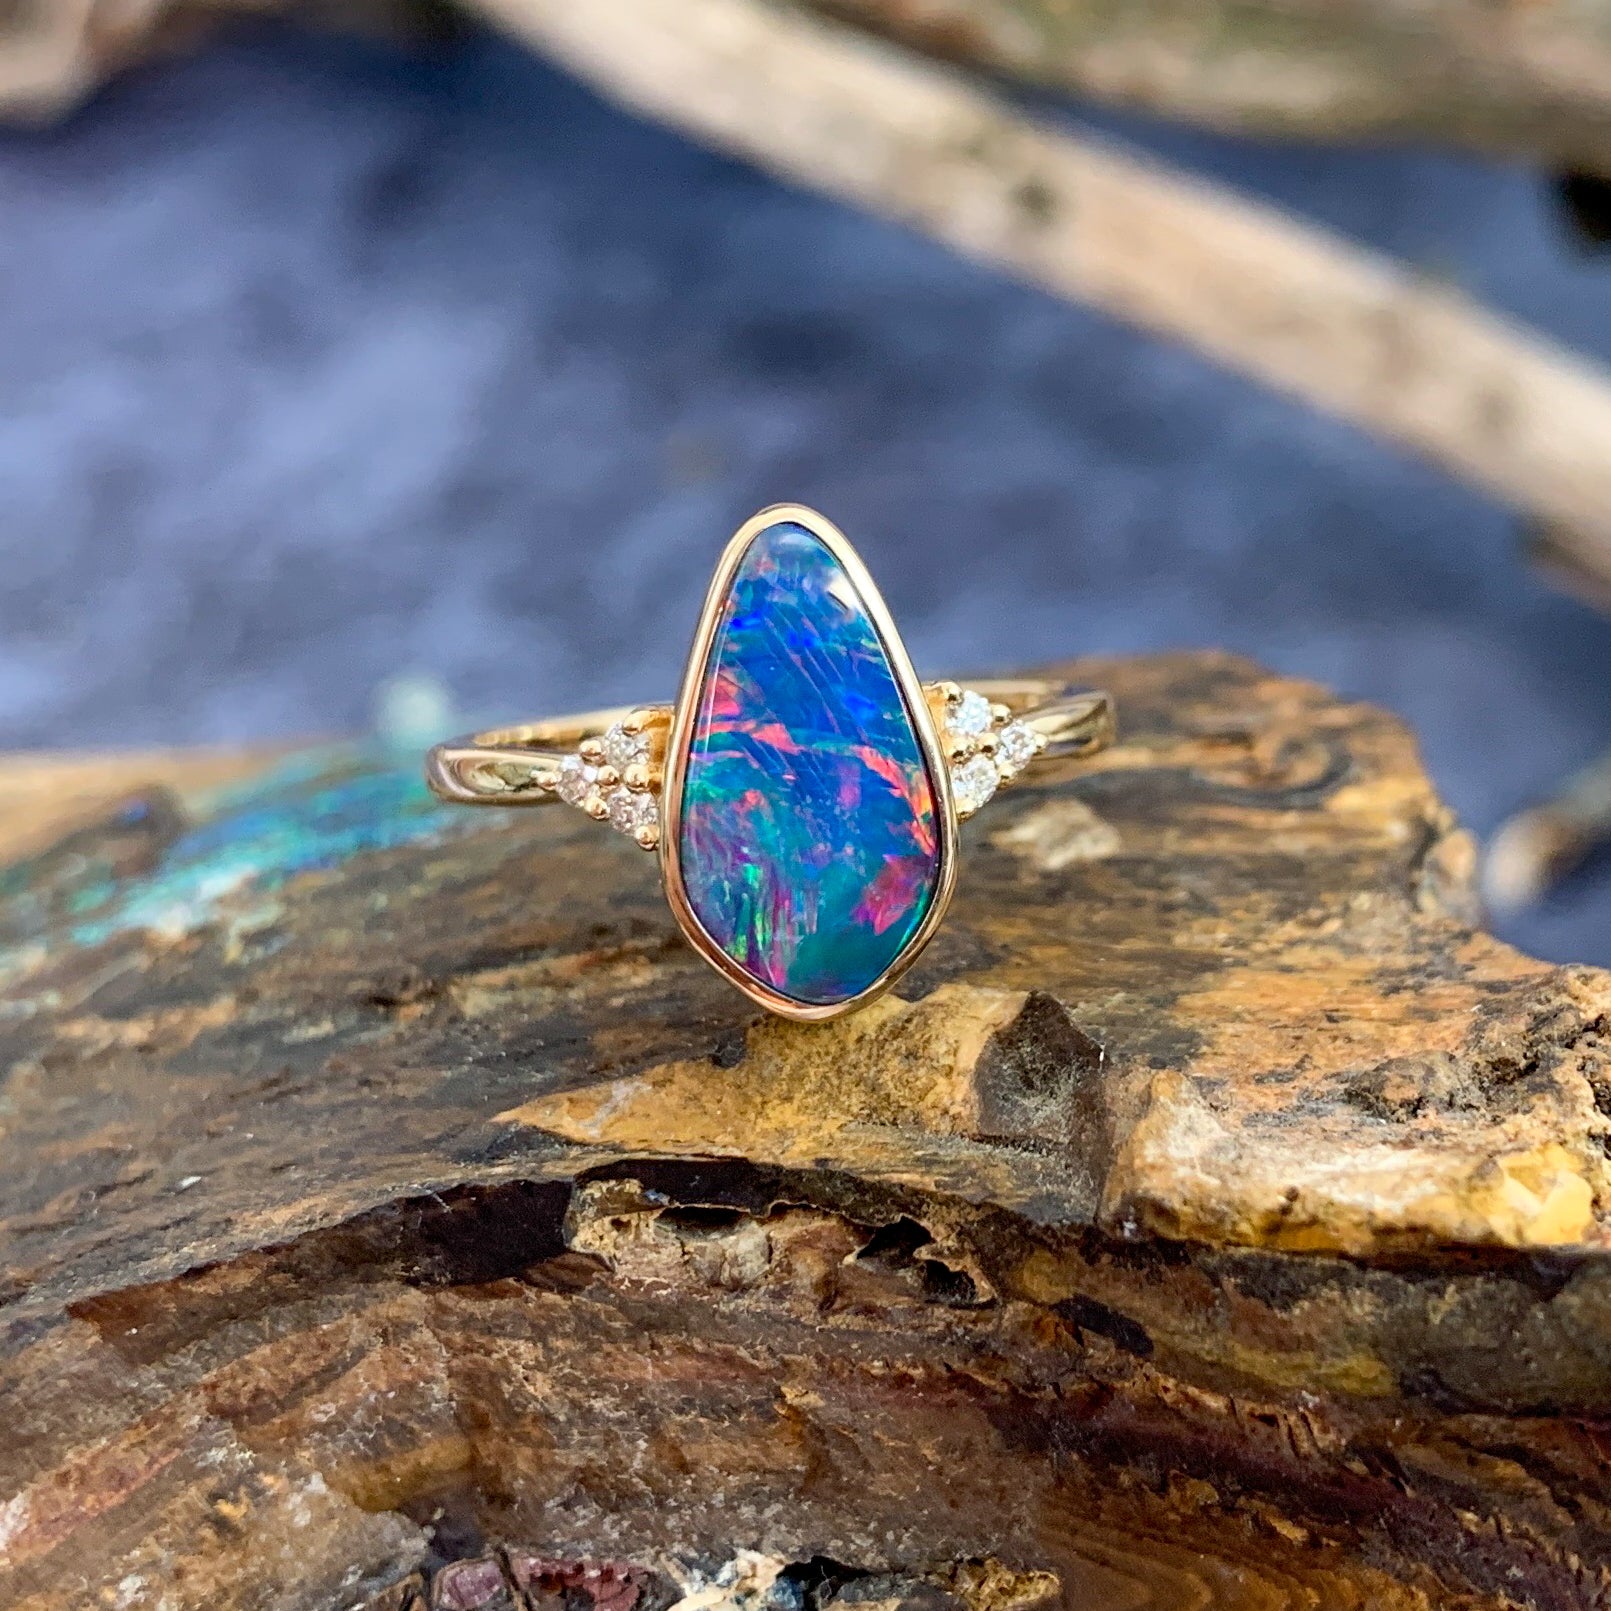 14kt Yellow Gold Opal doublet red flash with diamonds ring - Masterpiece Jewellery Opal & Gems Sydney Australia | Online Shop